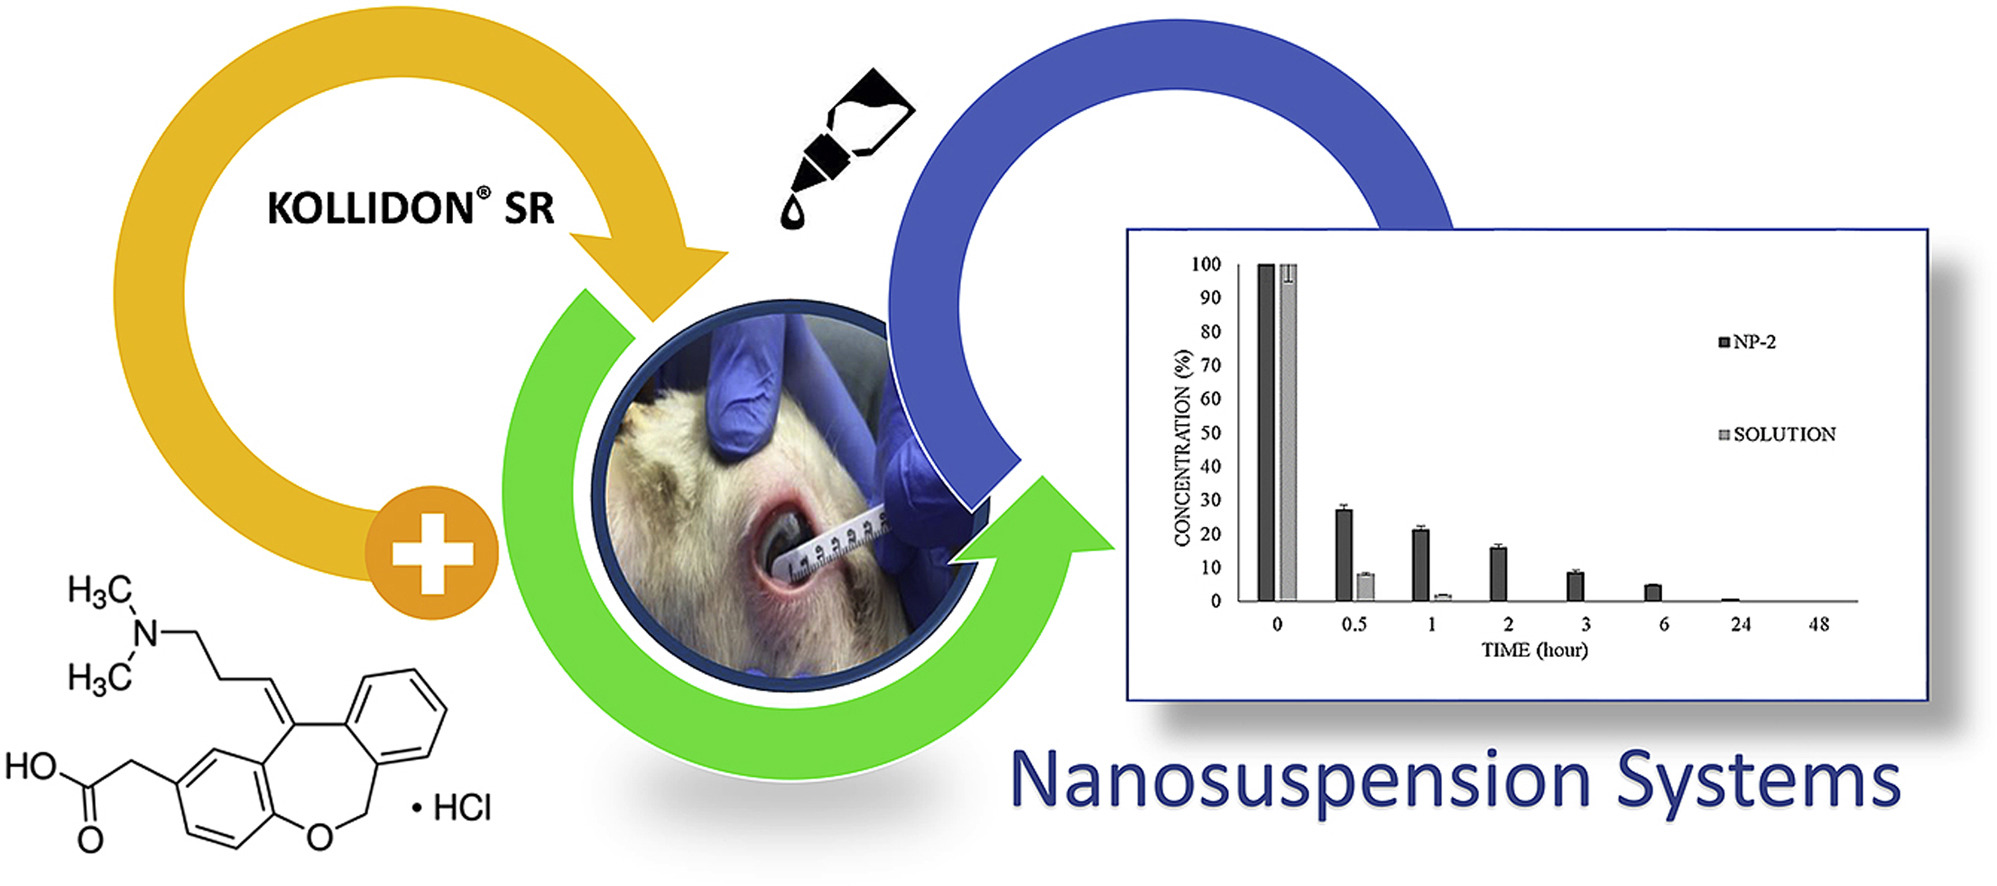 different nanosuspension systems